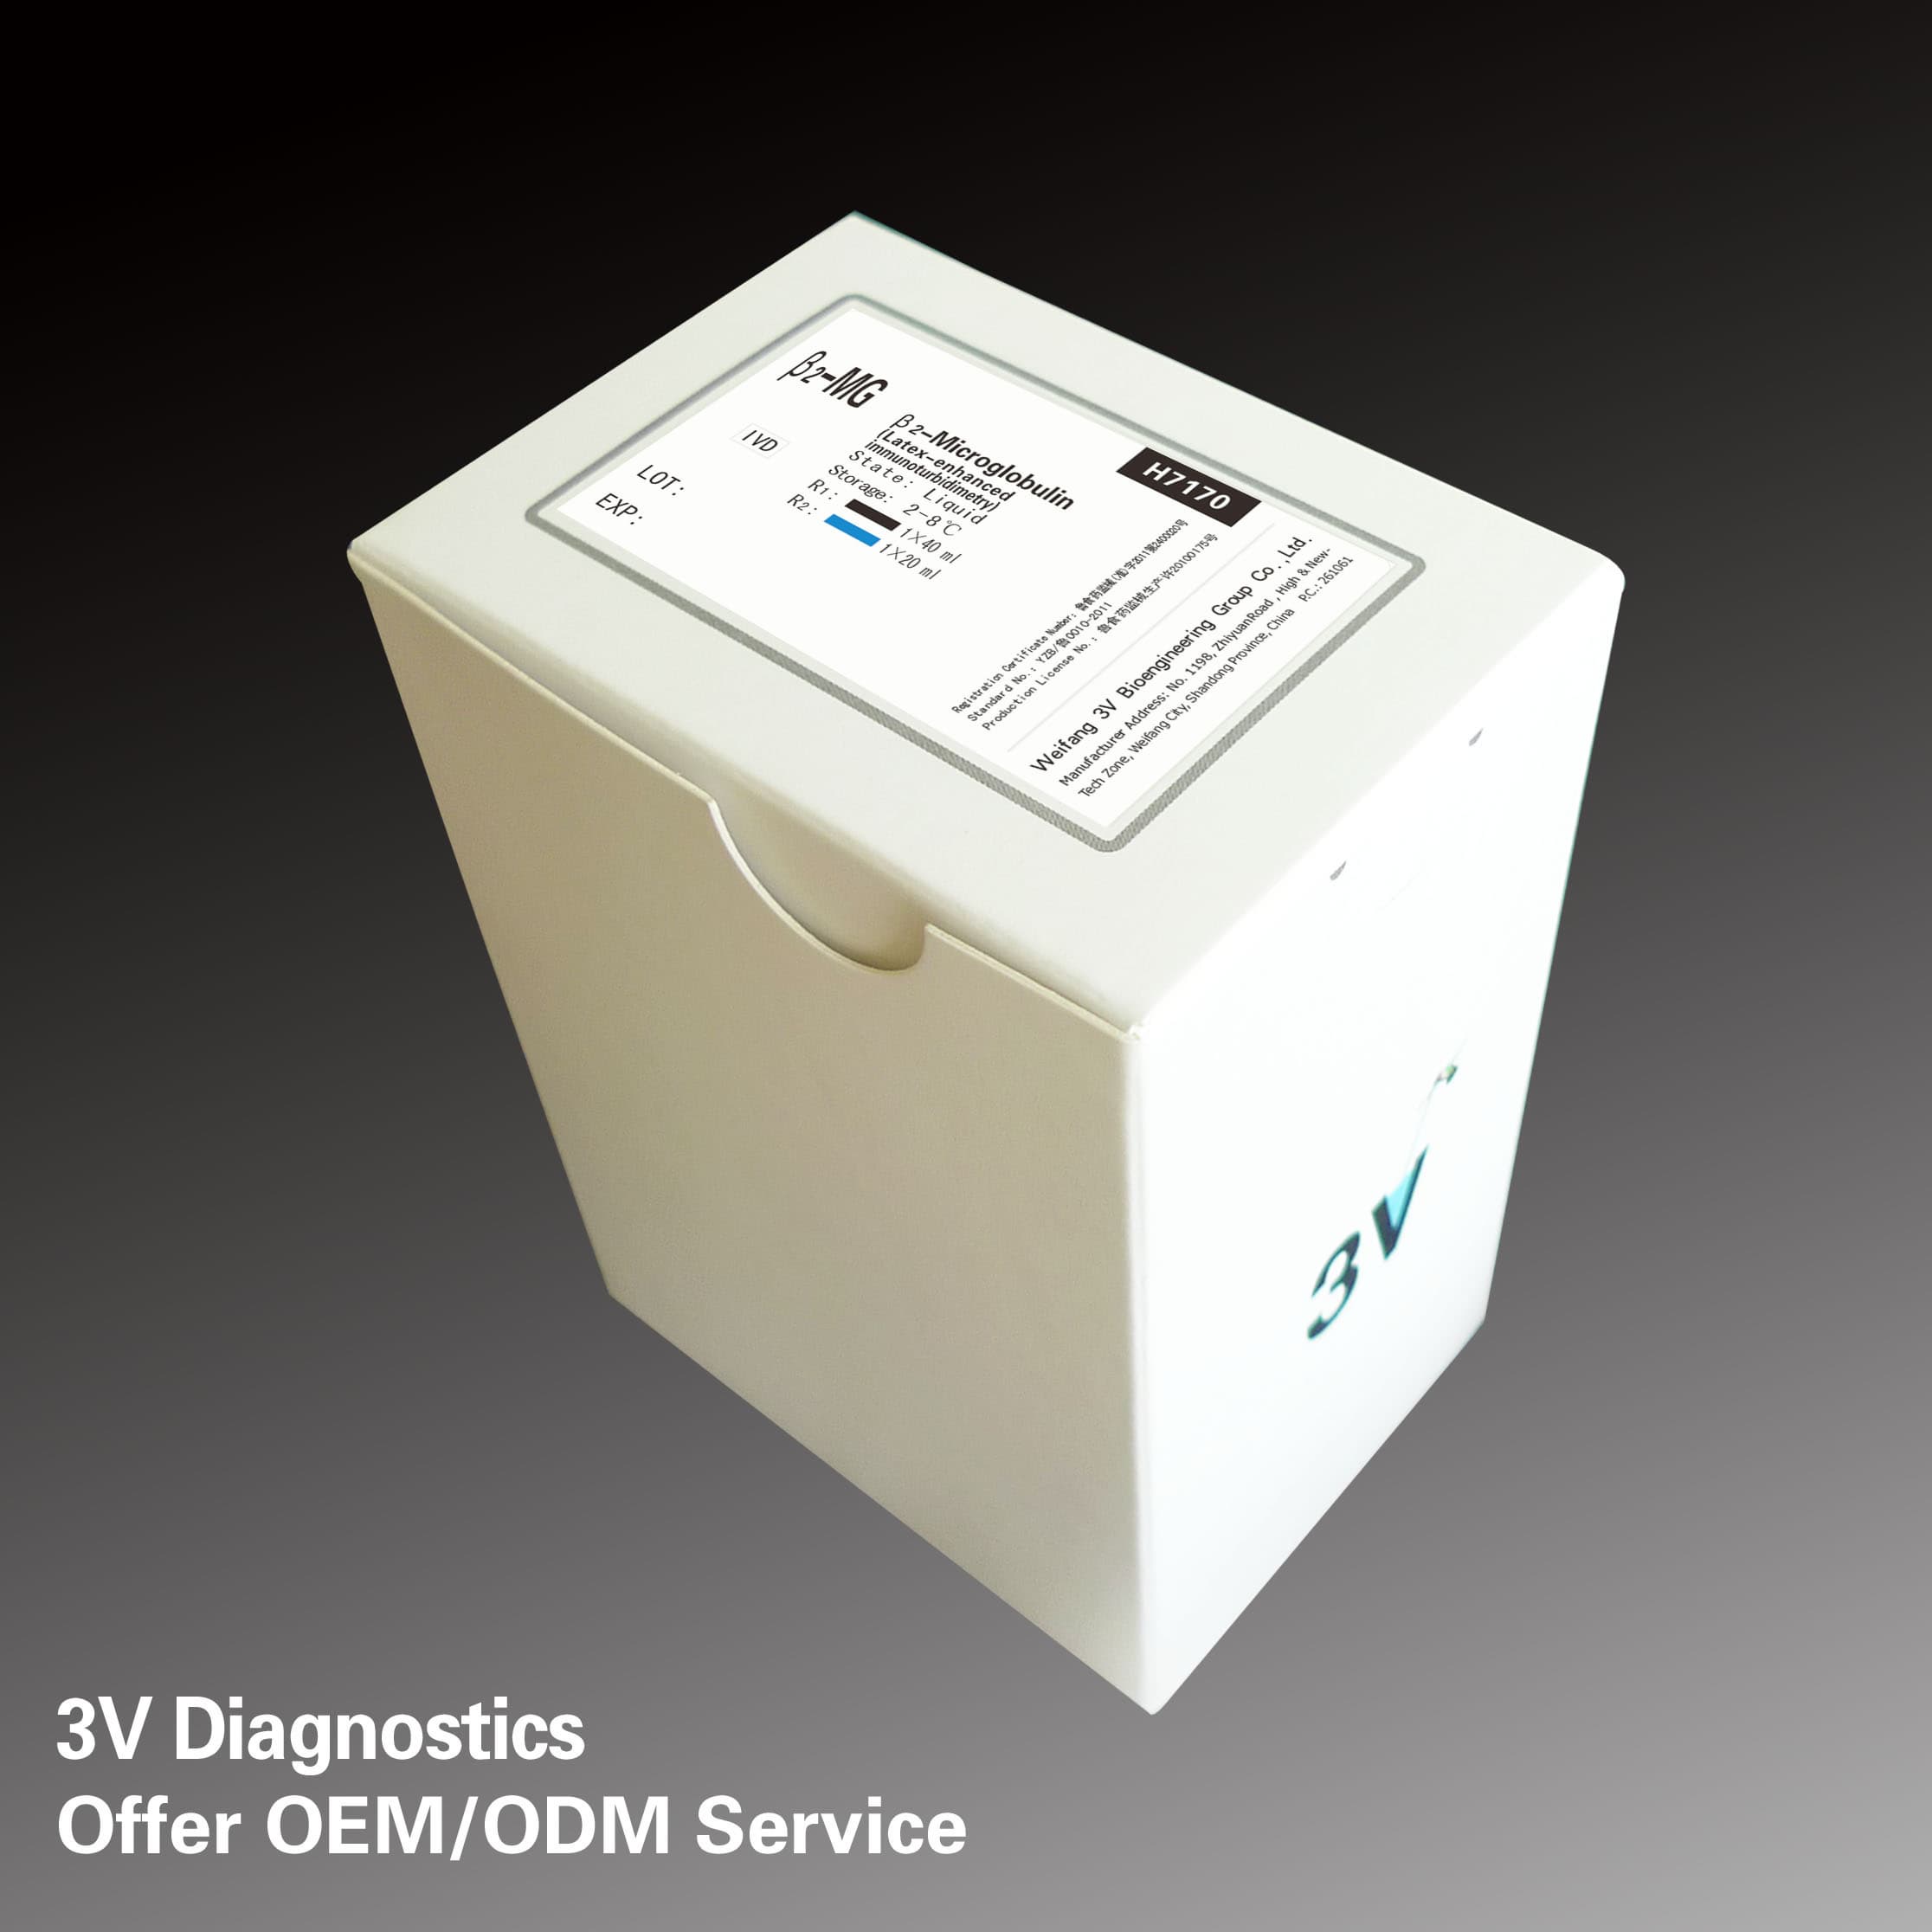 _2 Microglobulin Assay Kit_Diagnostic Reagent